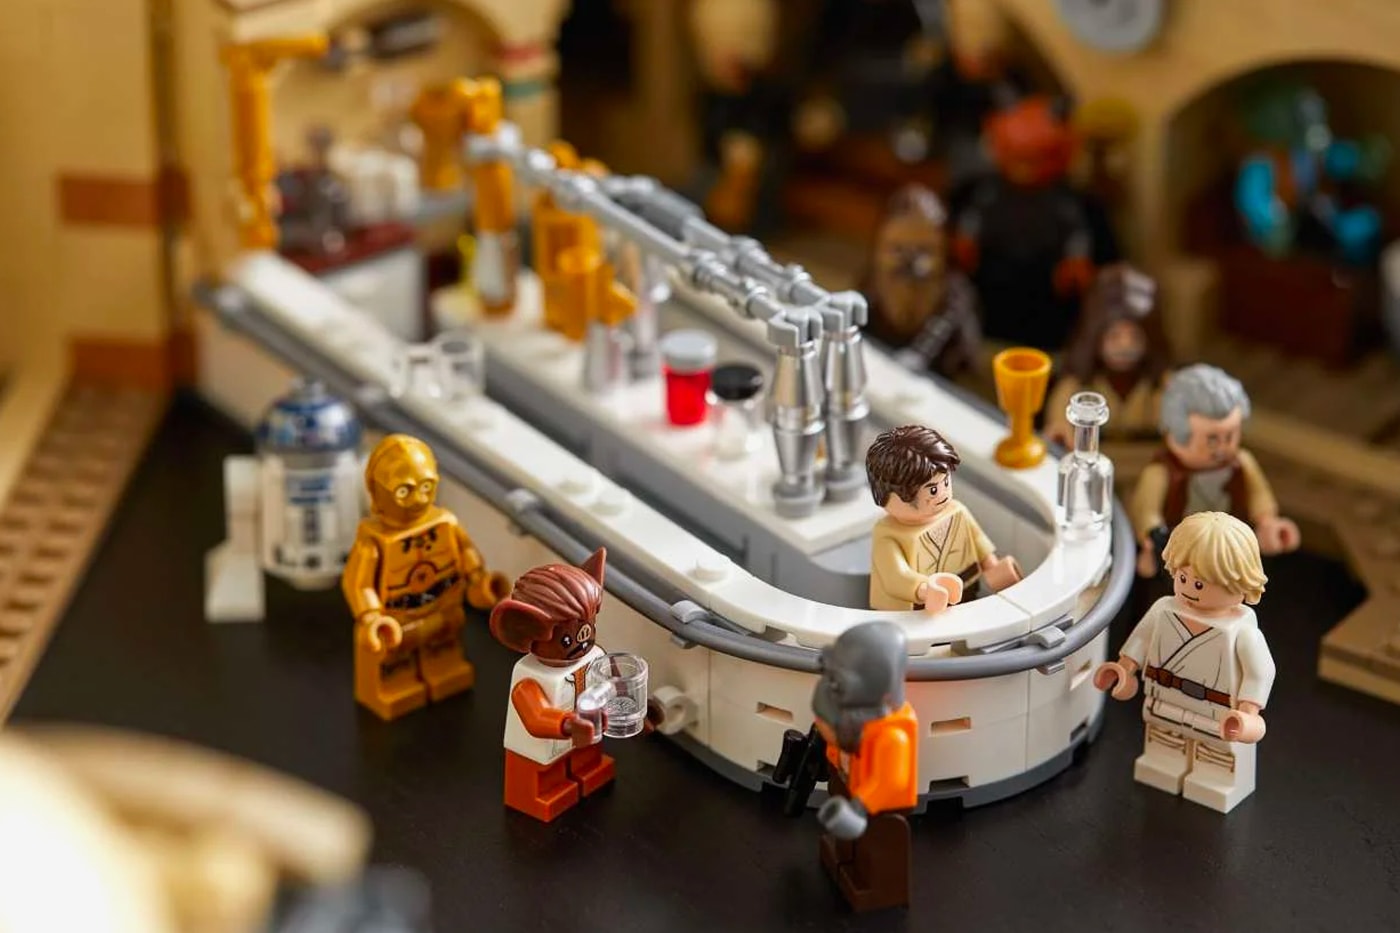 LEGO Star wars Mos Eisley Cantina set announcement news Luke Skywalker Light Saber Lucasfilms A New Hope C-3P0 Han Solo Ponda Baba Greedo